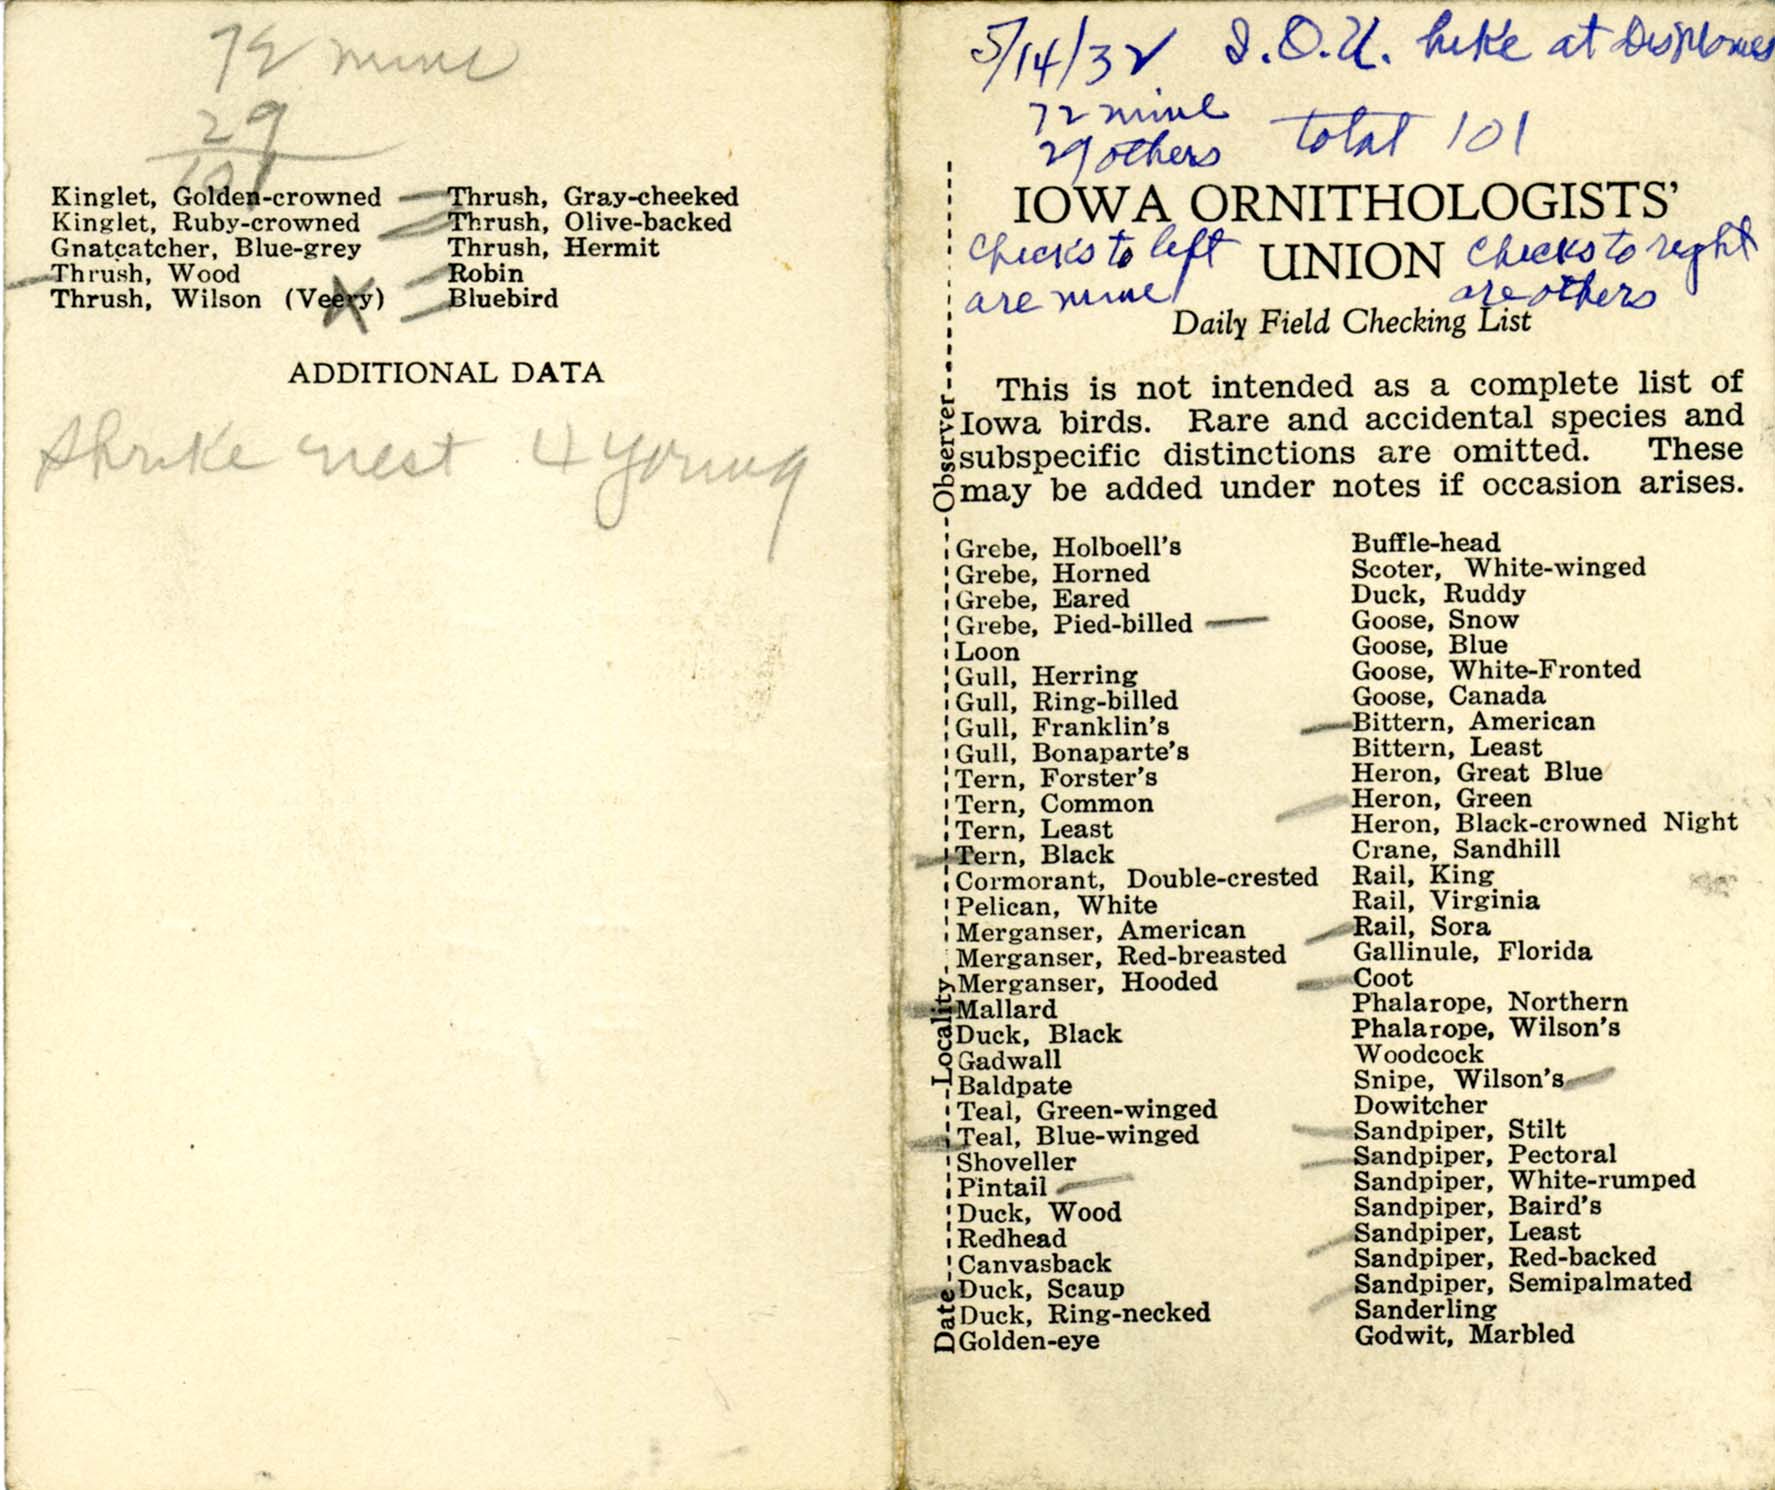 Daily field checking list, Walter Rosene, May 14, 1932